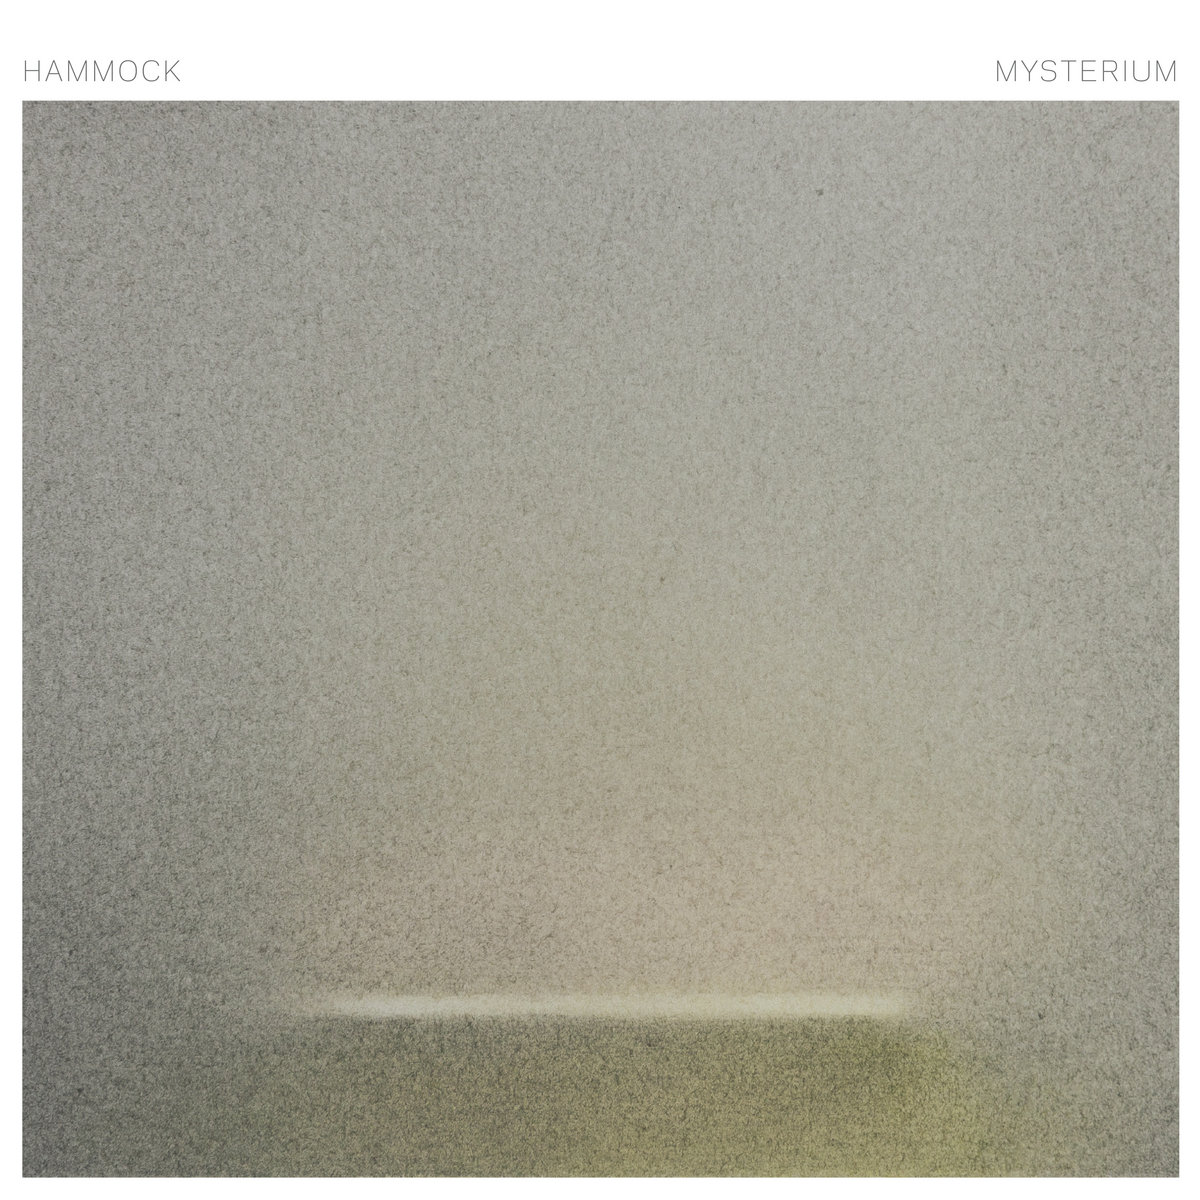 Hammock — Mysterium cover artwork